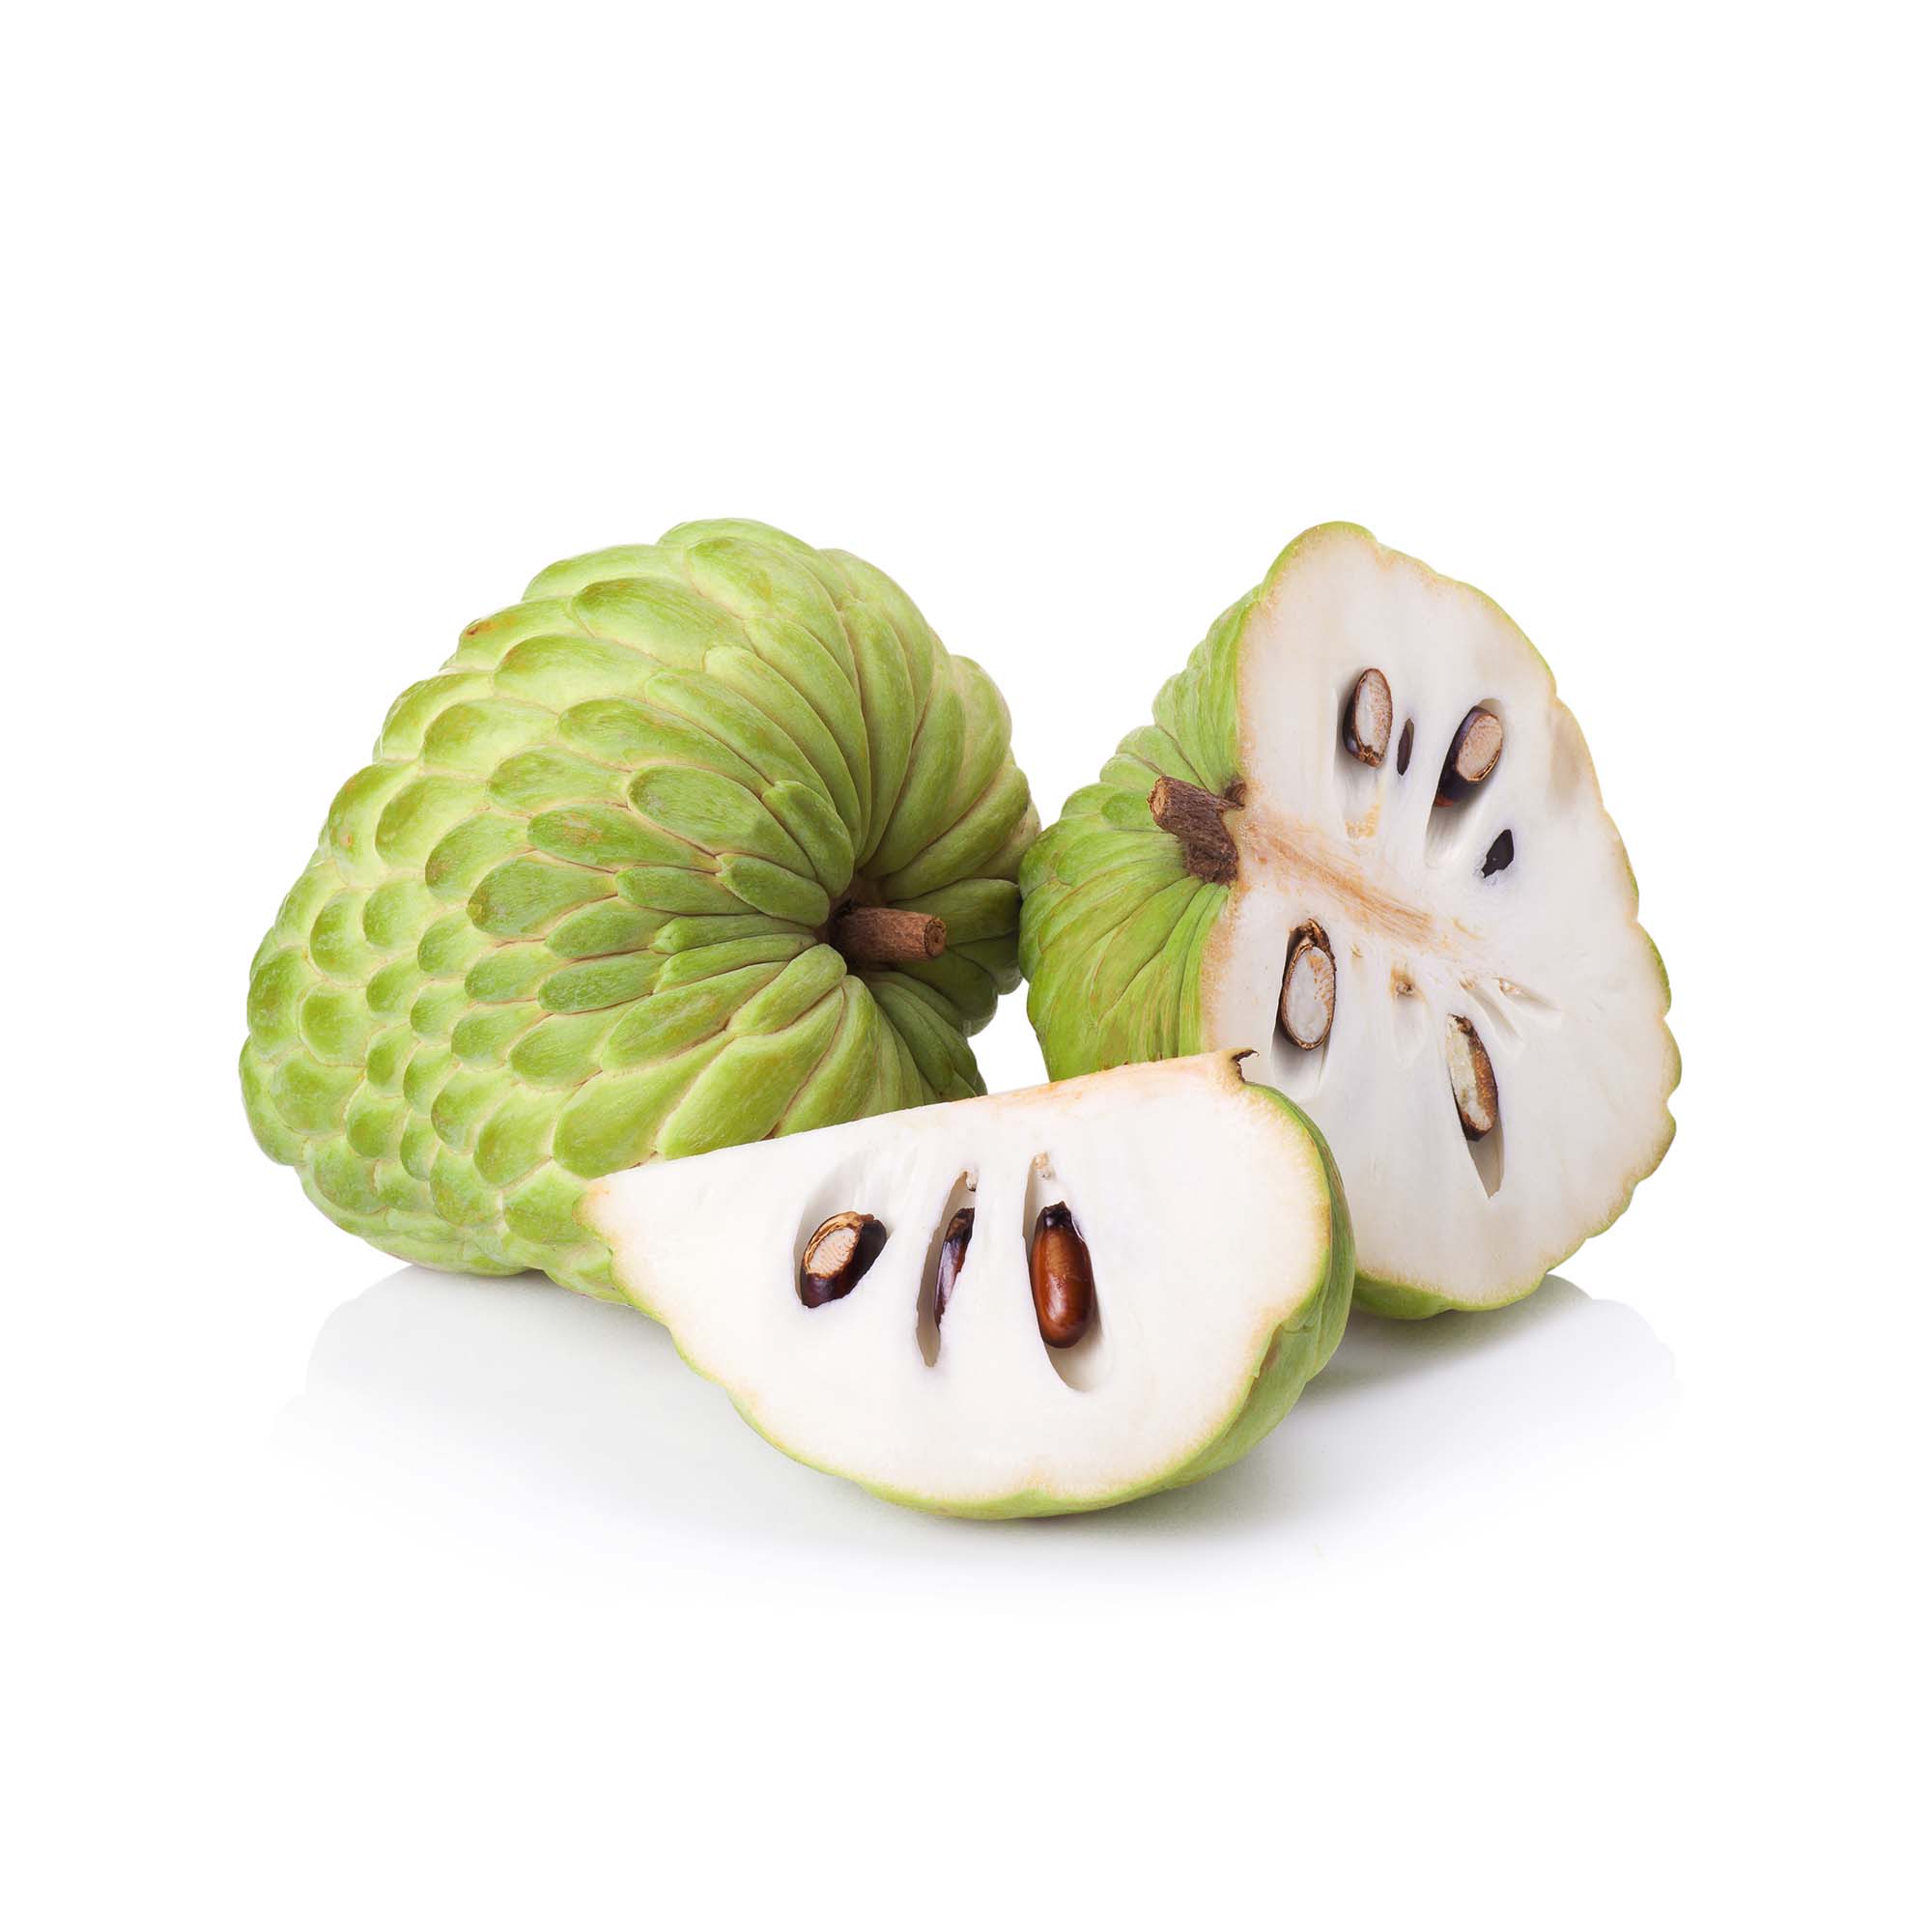 Custard Apple - Atemoya | Exotic Fruits - Rare & Tropical Exotic Fruit Shop UK